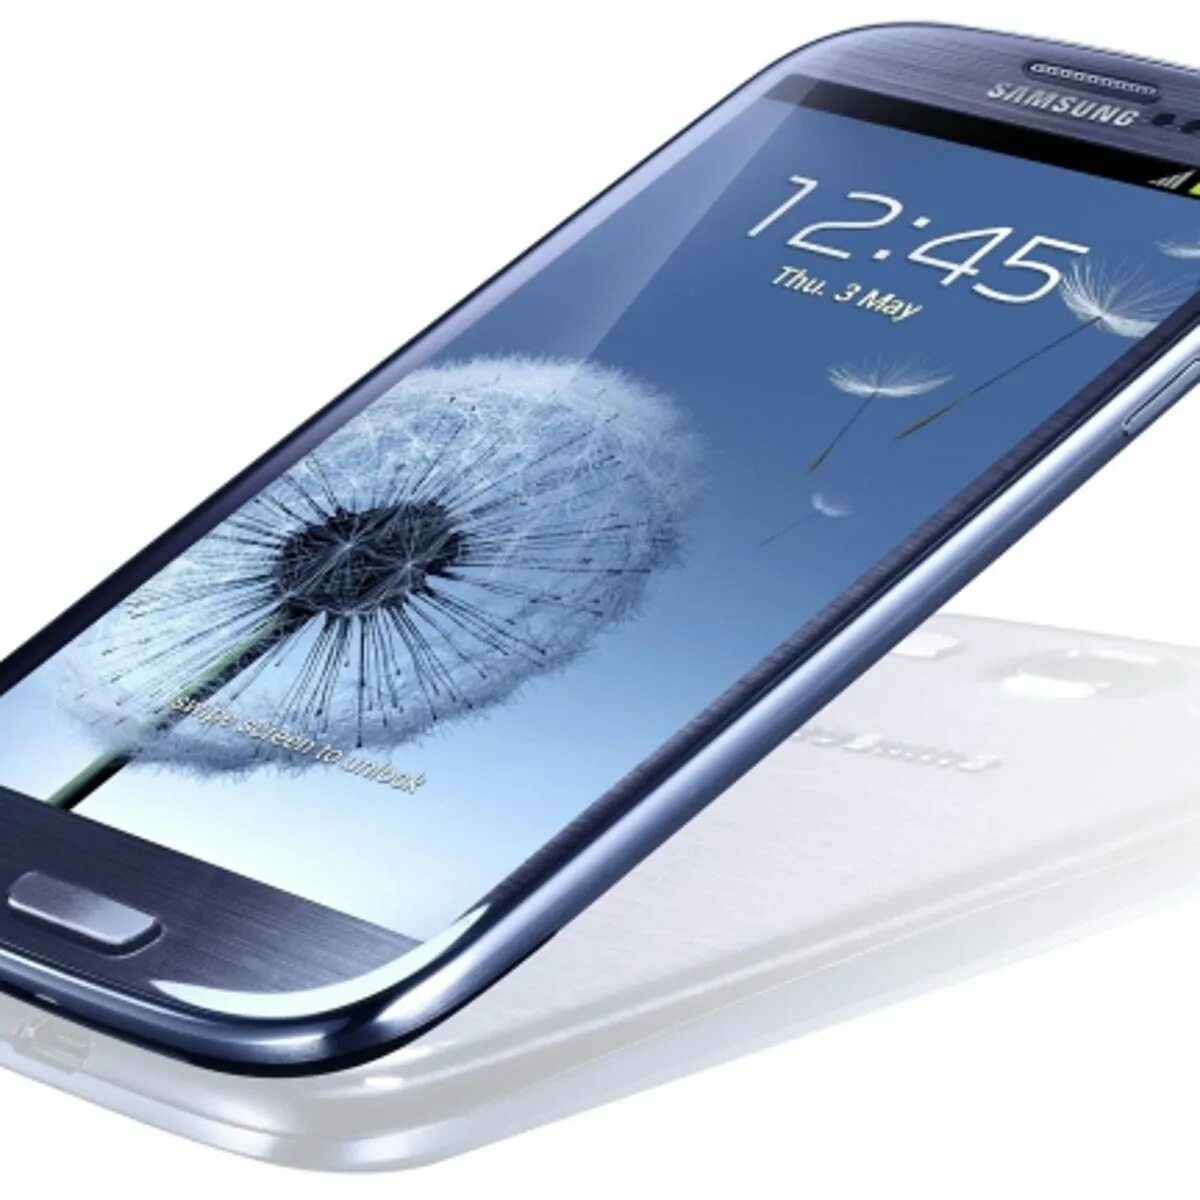 Samsung Galaxy s3. Samsung 2023 смартфон. Новый самсунг галакси 2023. Samsung Galaxy s III. Галакси купить россия